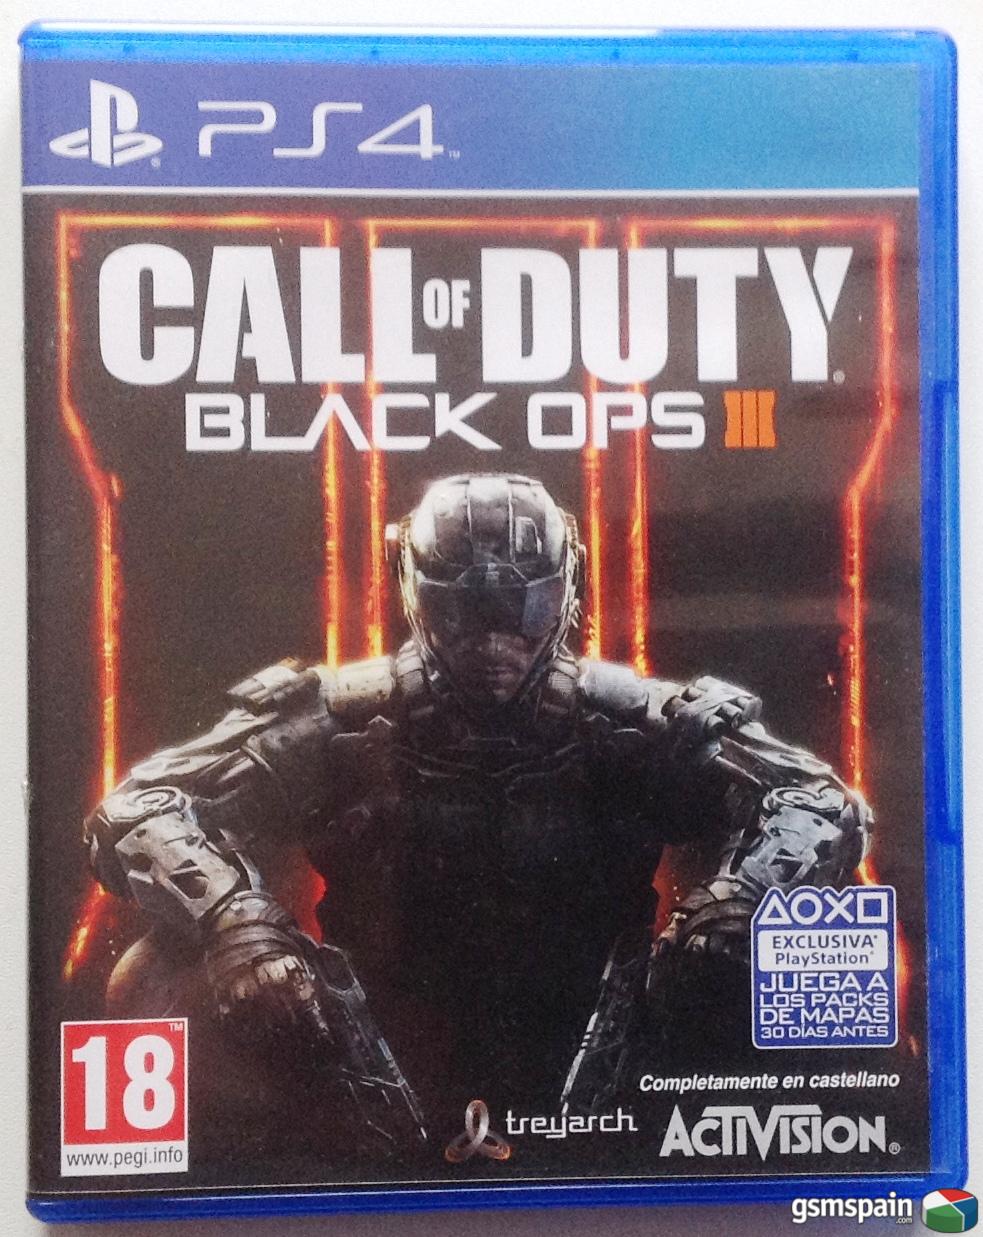 [VENDO] Juego para PS4 Call of Duty Blakc Ops III